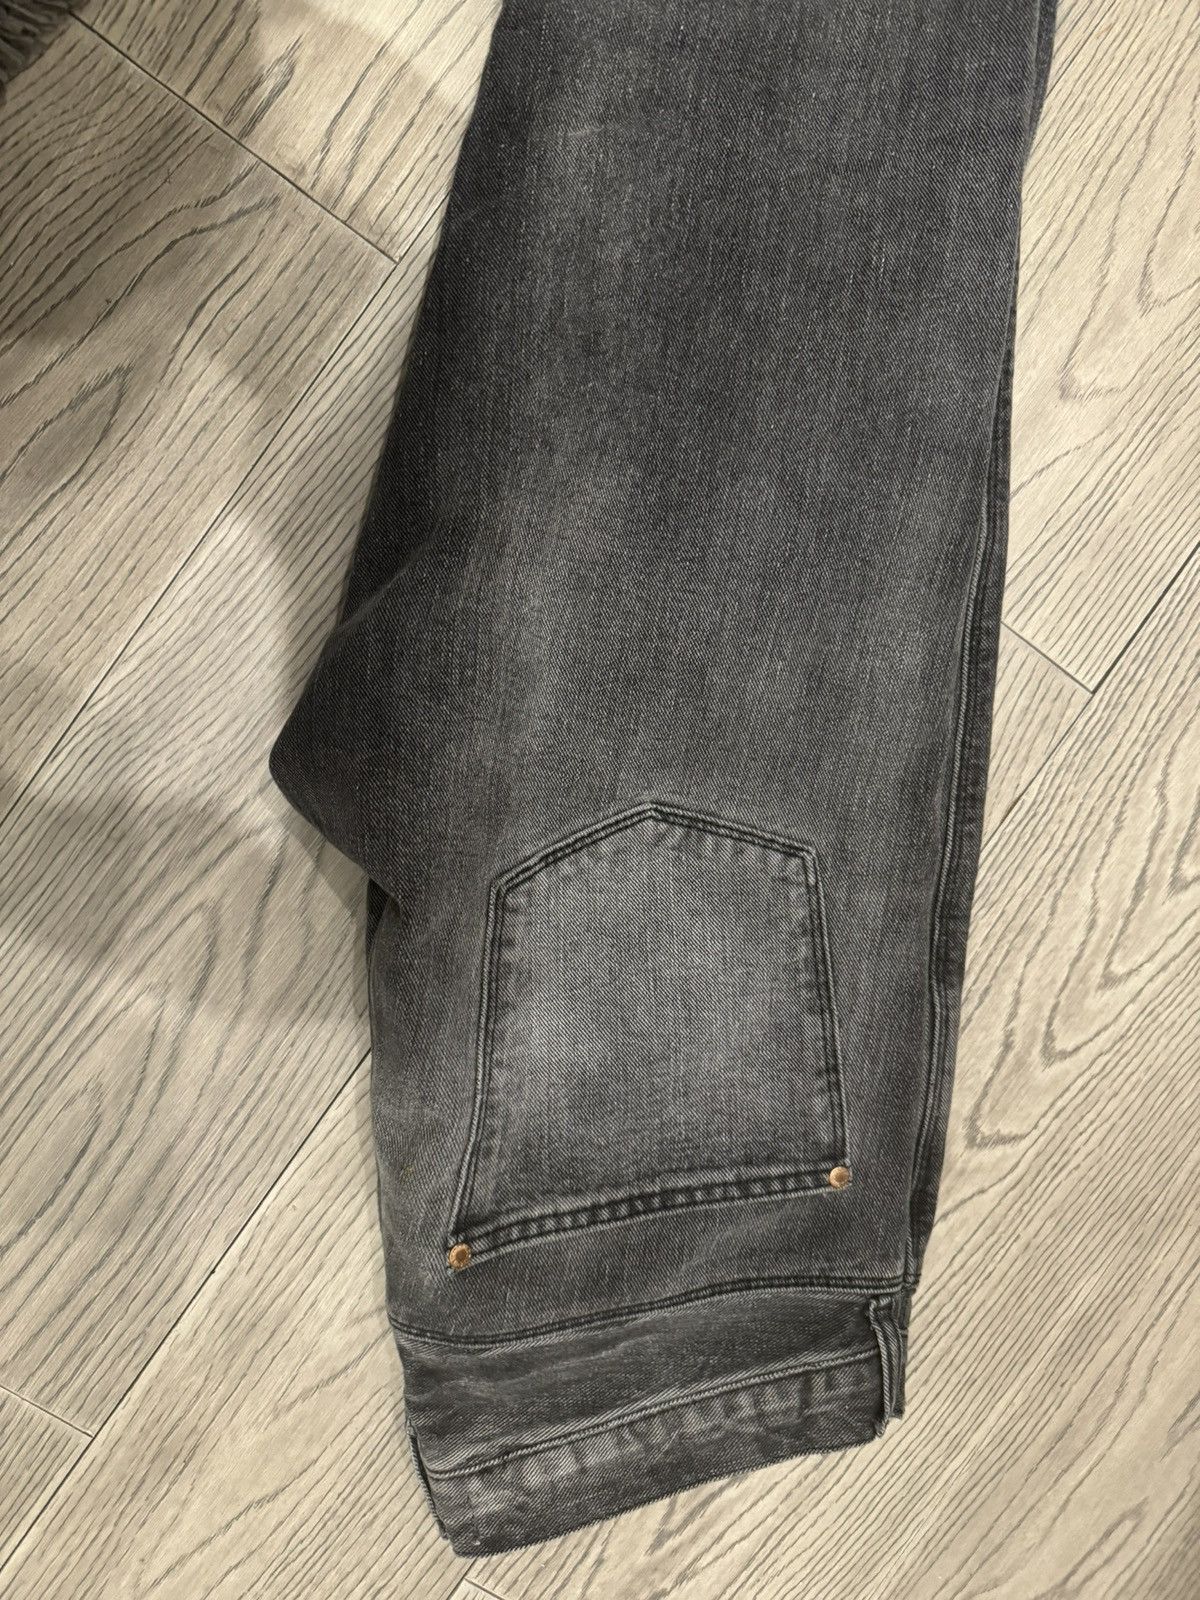 Acne Studios Acne studio jeans Size US 32 / EU 48 - 6 Thumbnail